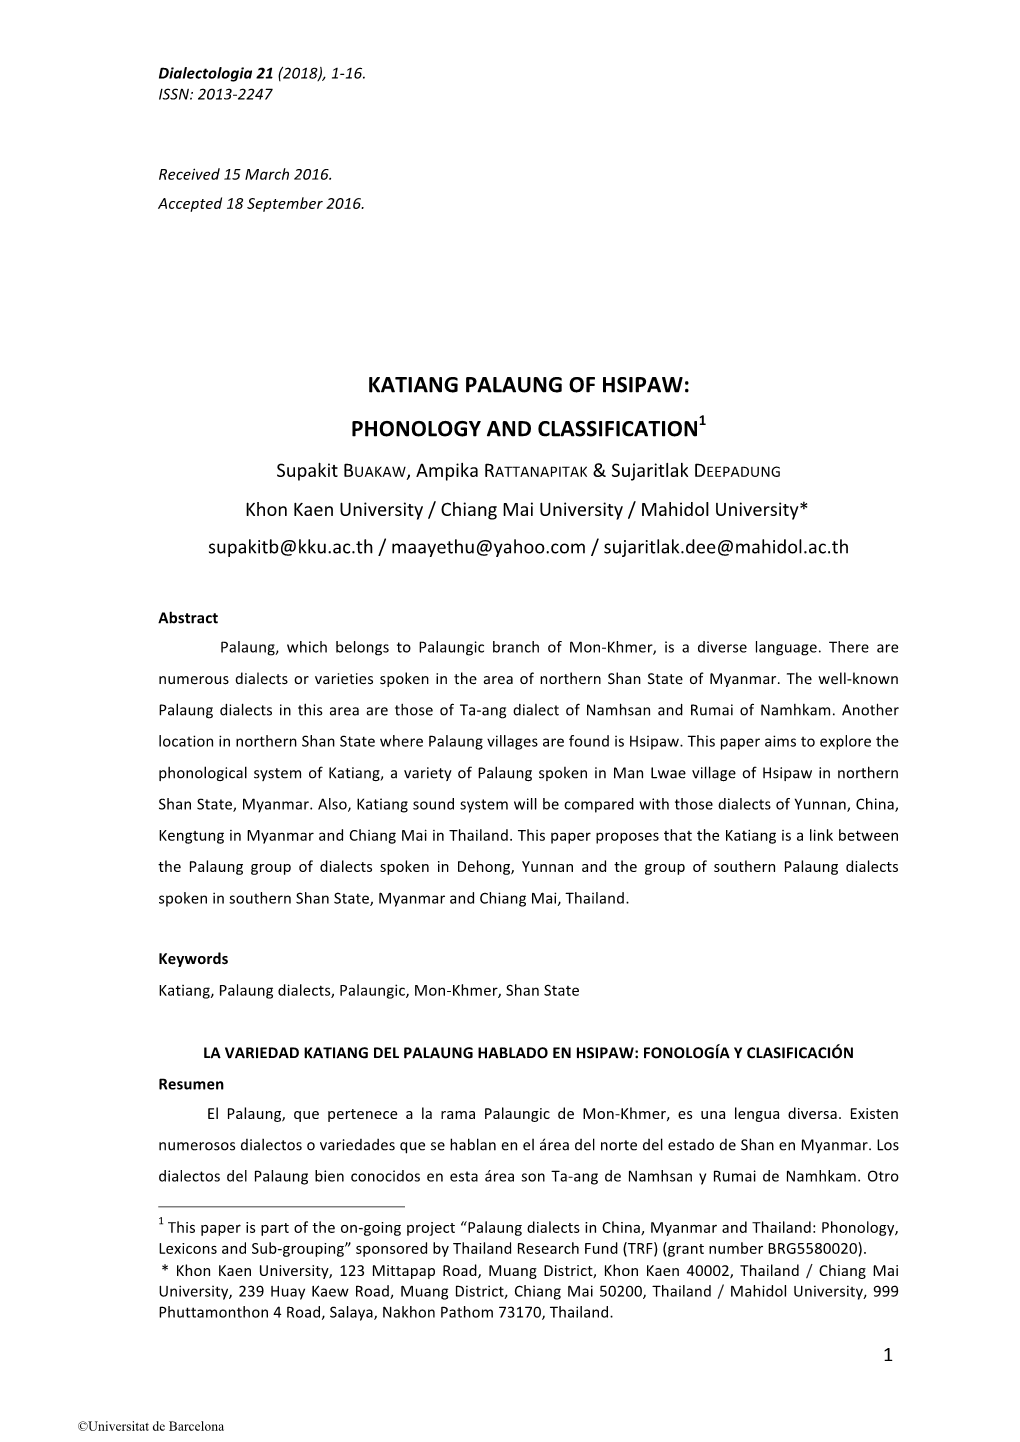 Katiang Palaung of Hsipaw: Phonology and Classification1